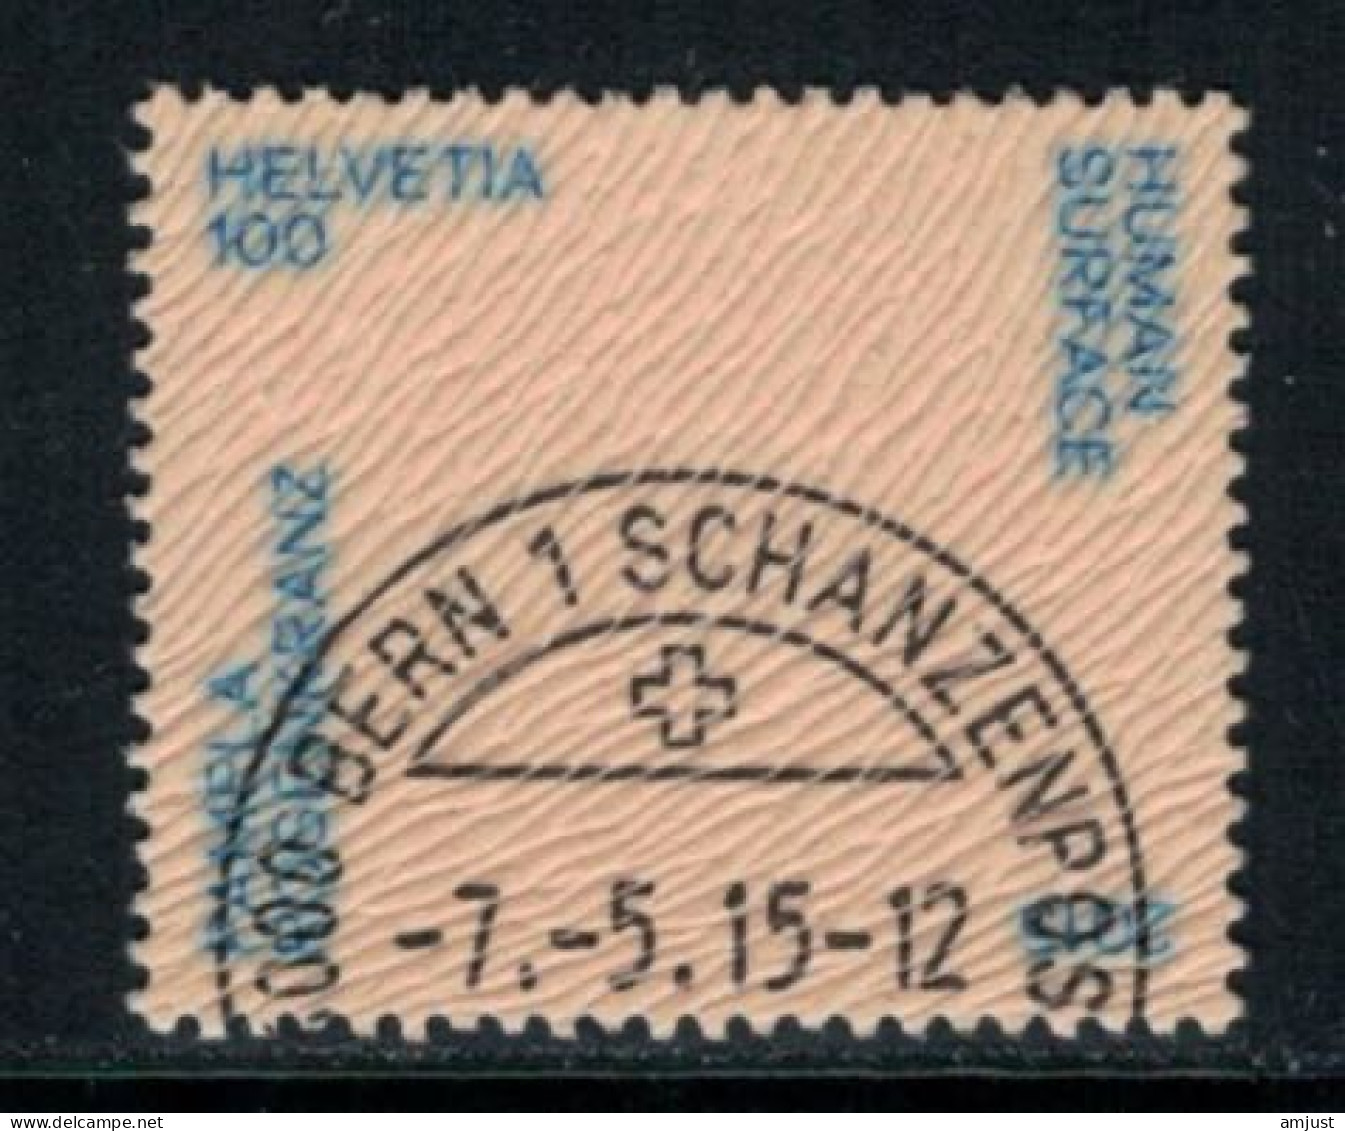 Suisse // Schweiz // Switzerland // 2010-2017 // 2015 // Structure De Peau Humaine No. 1553 - Used Stamps